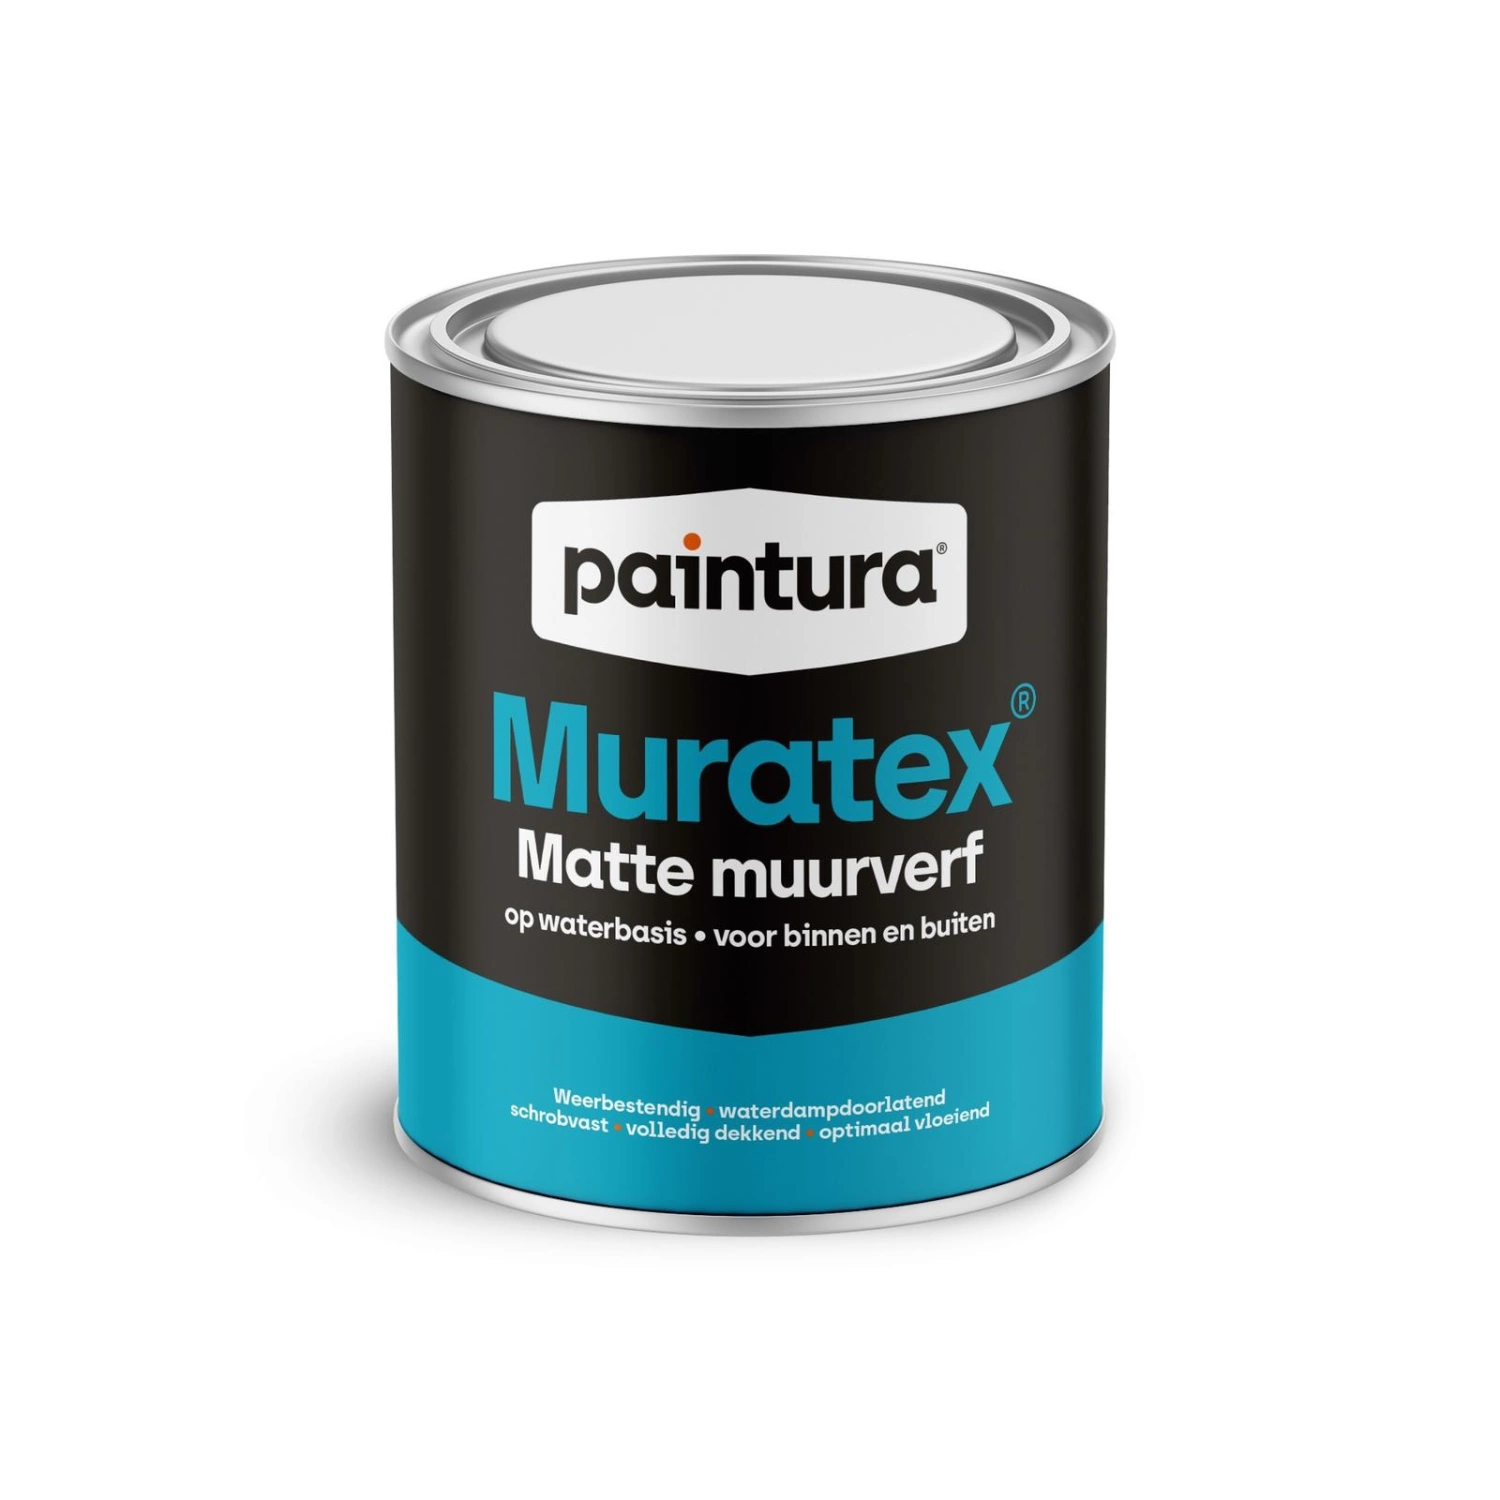 Paintura Muratex matte muurverf - op kleur gemengd - 5L-image